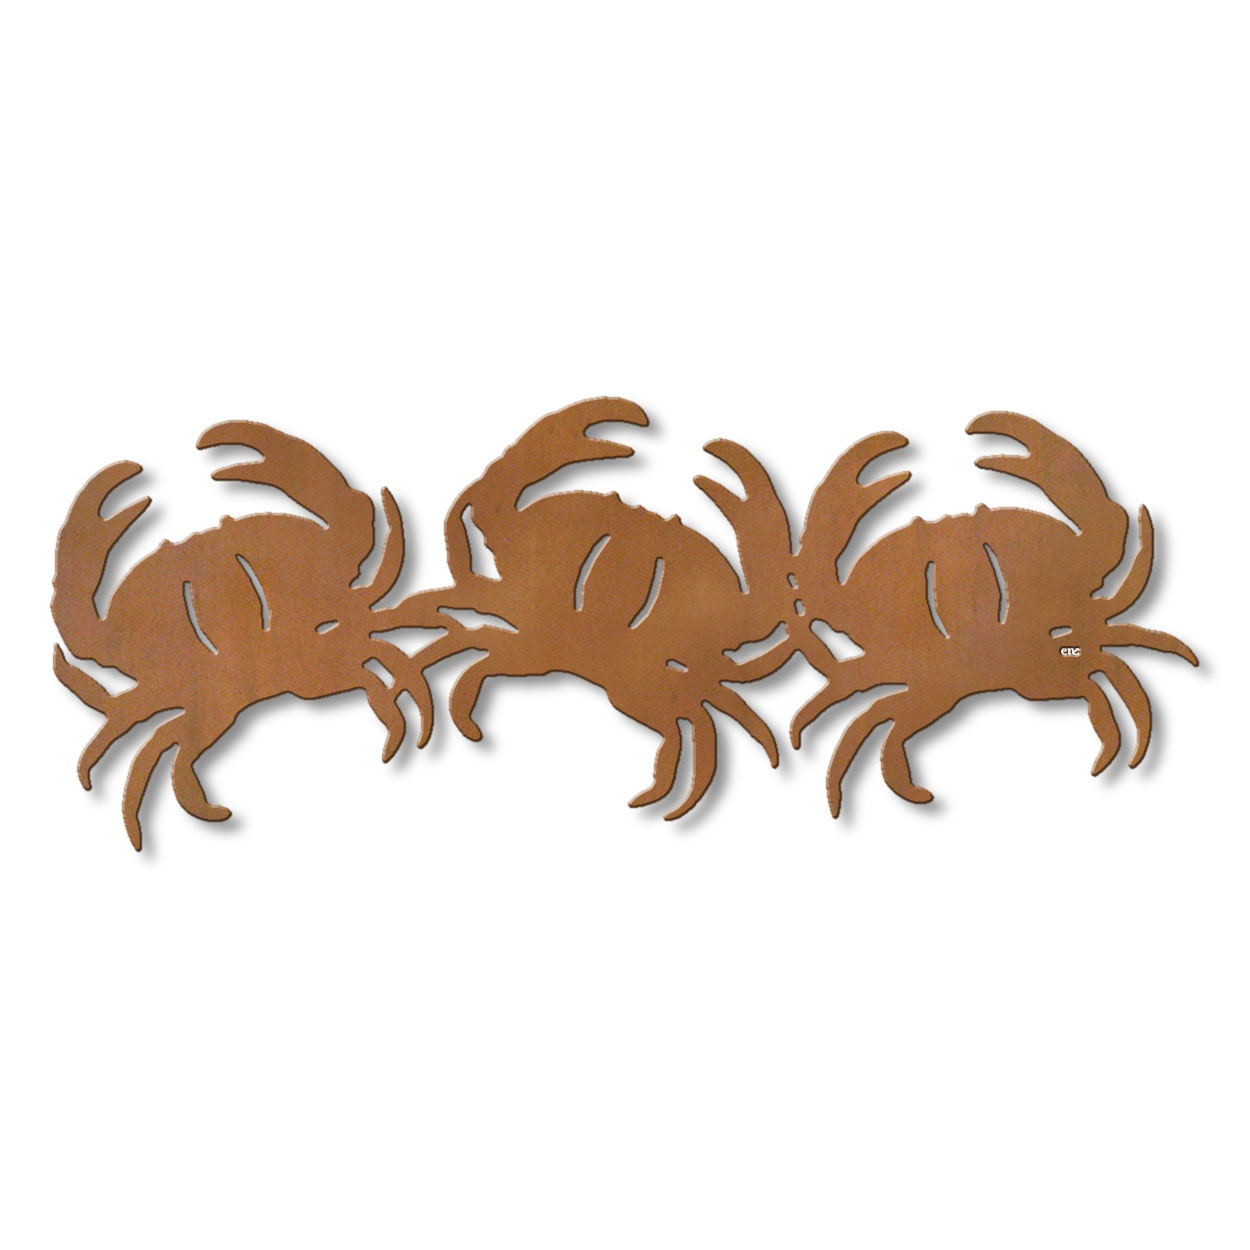 625456r - 18 or 24in Metal Wall Art - Three Crabs - Rust Patina